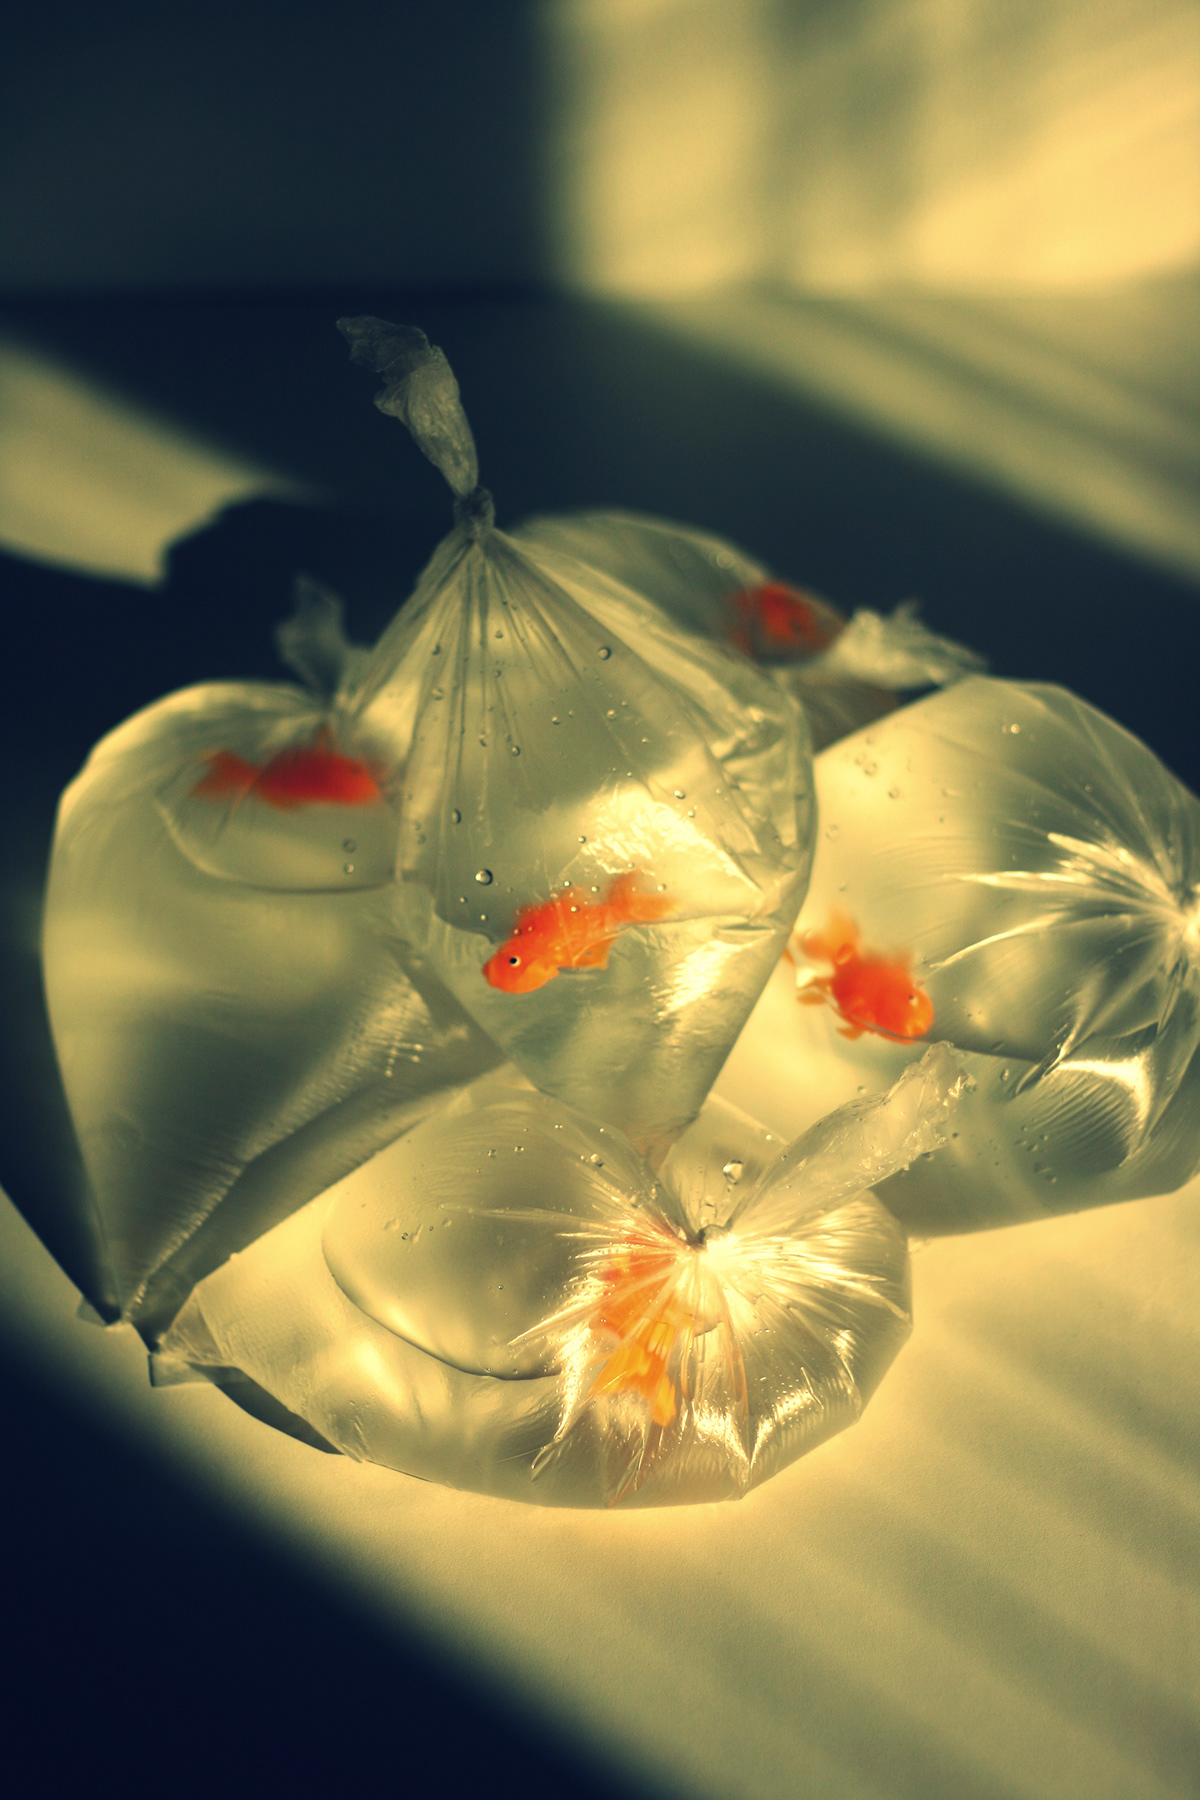 goldfish plastic bag water light shadow tamara stoevelaar